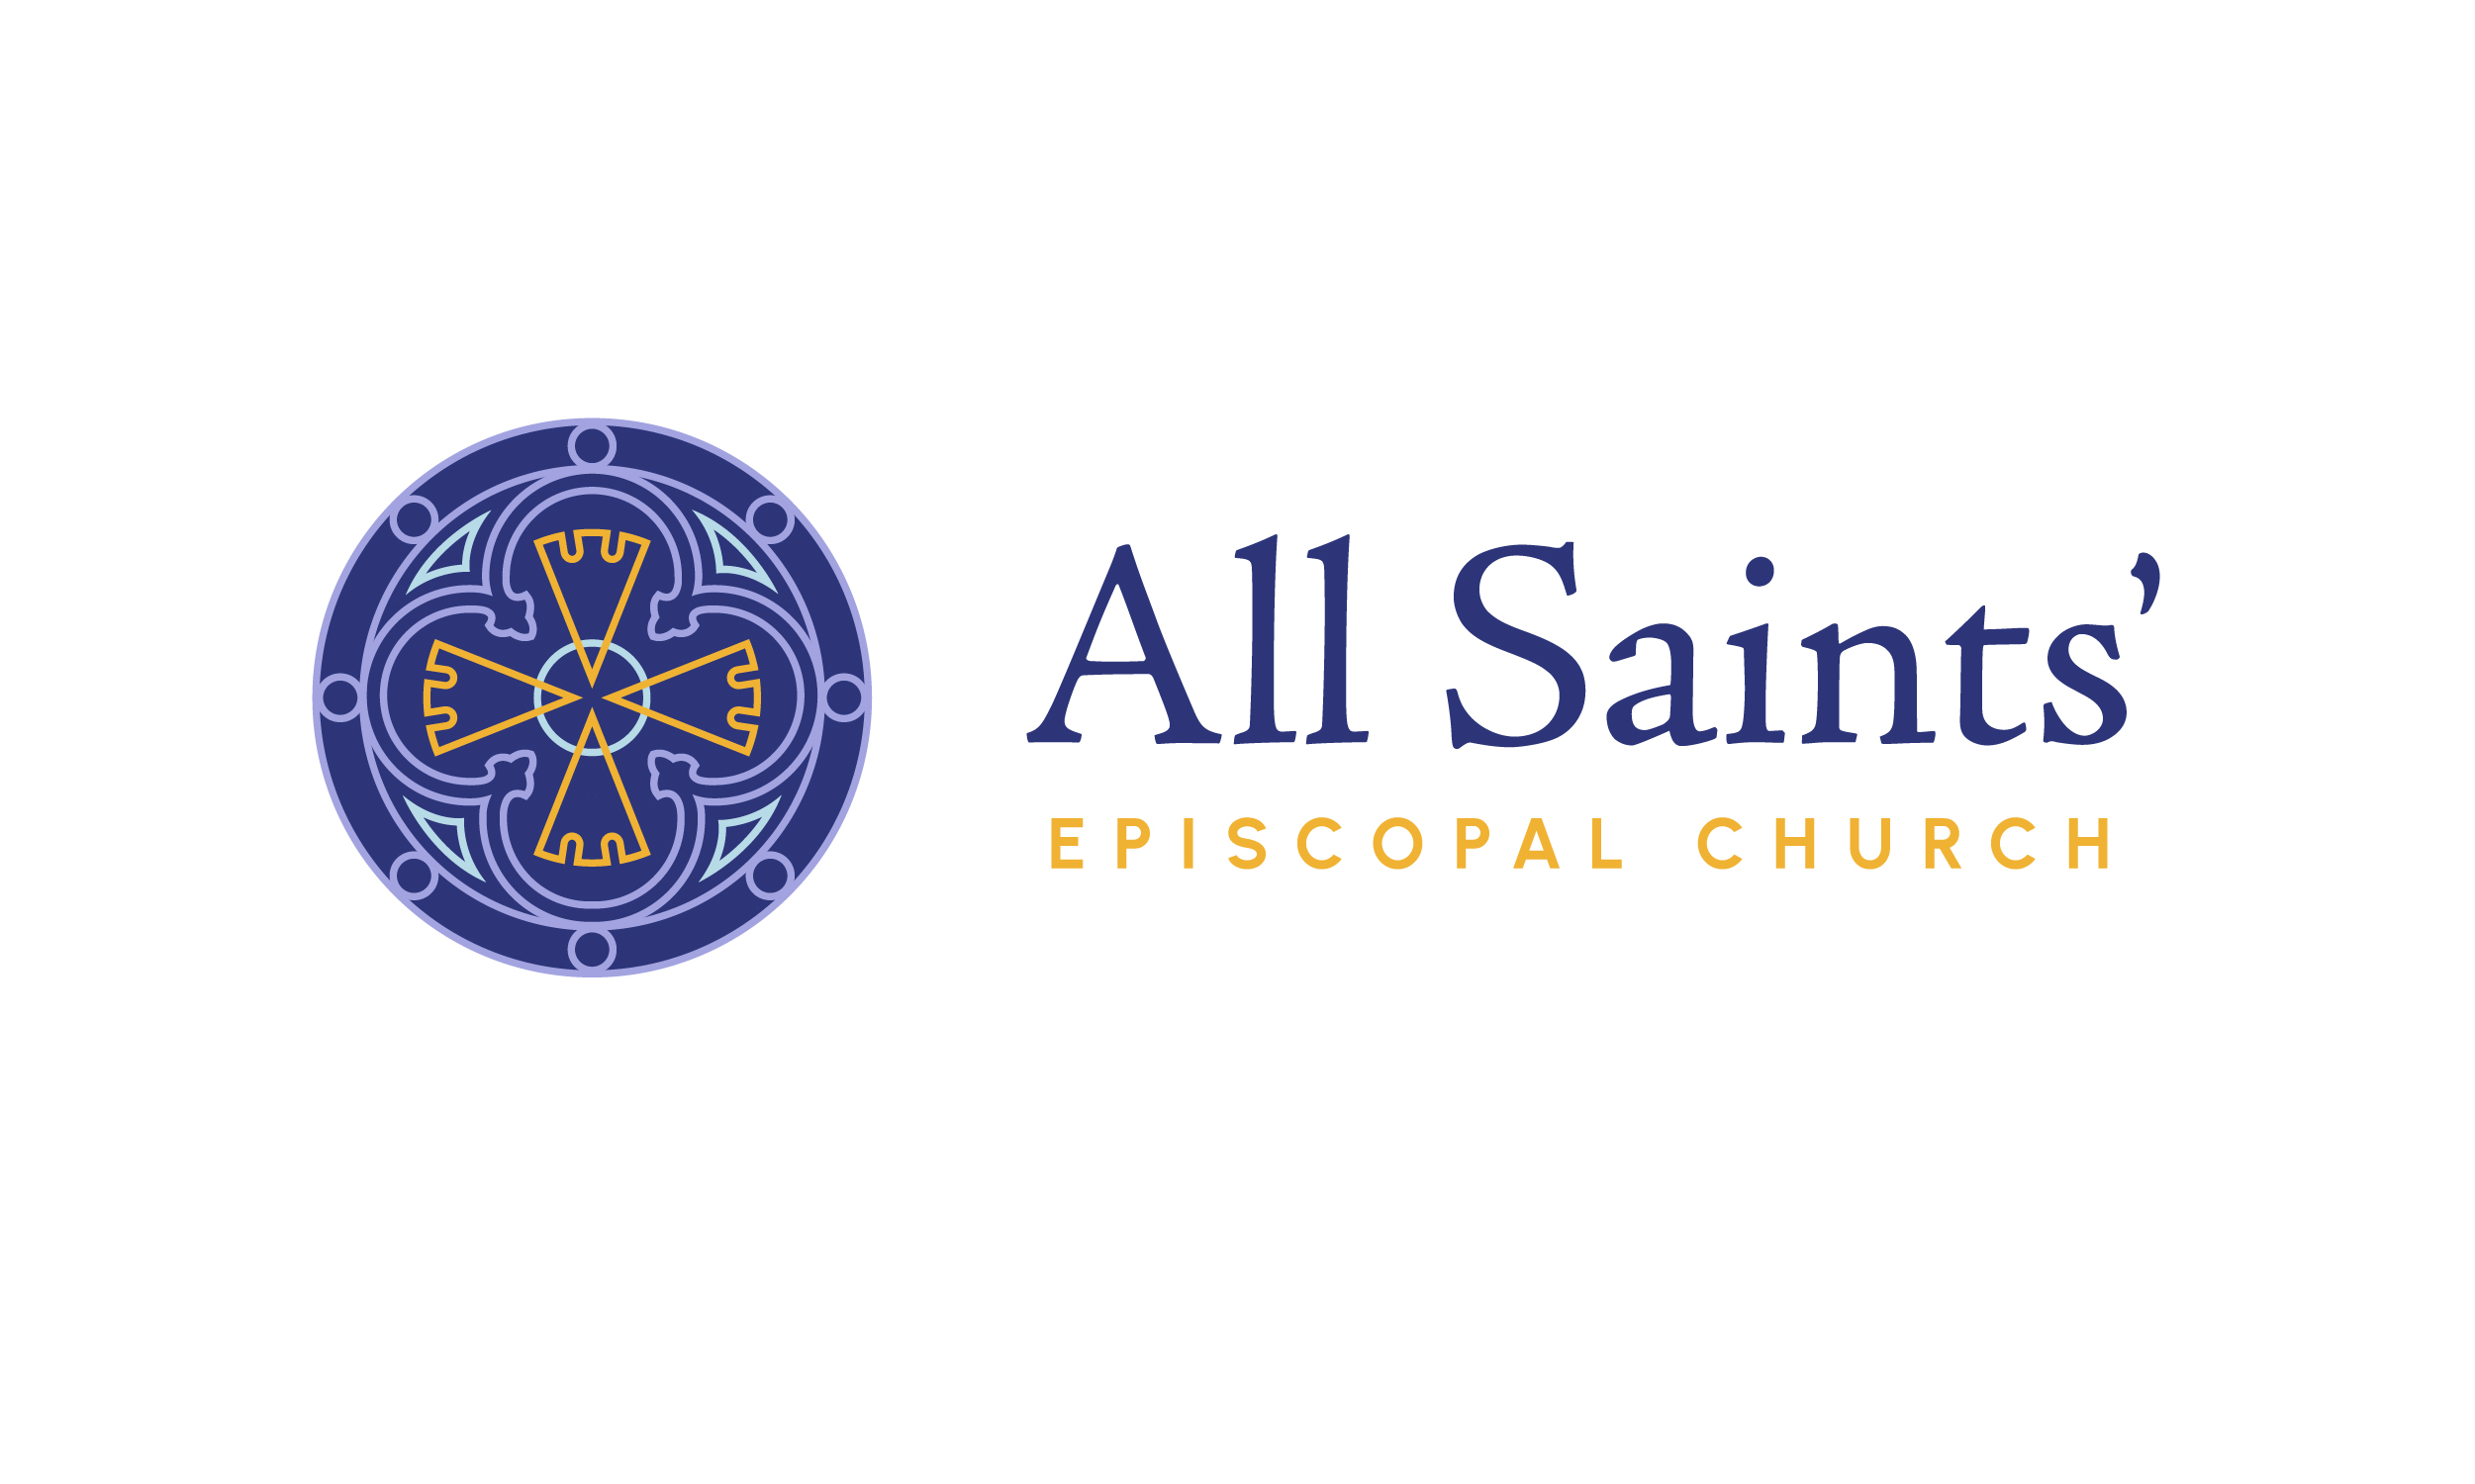 All Saints' Episcopal Church New Logo